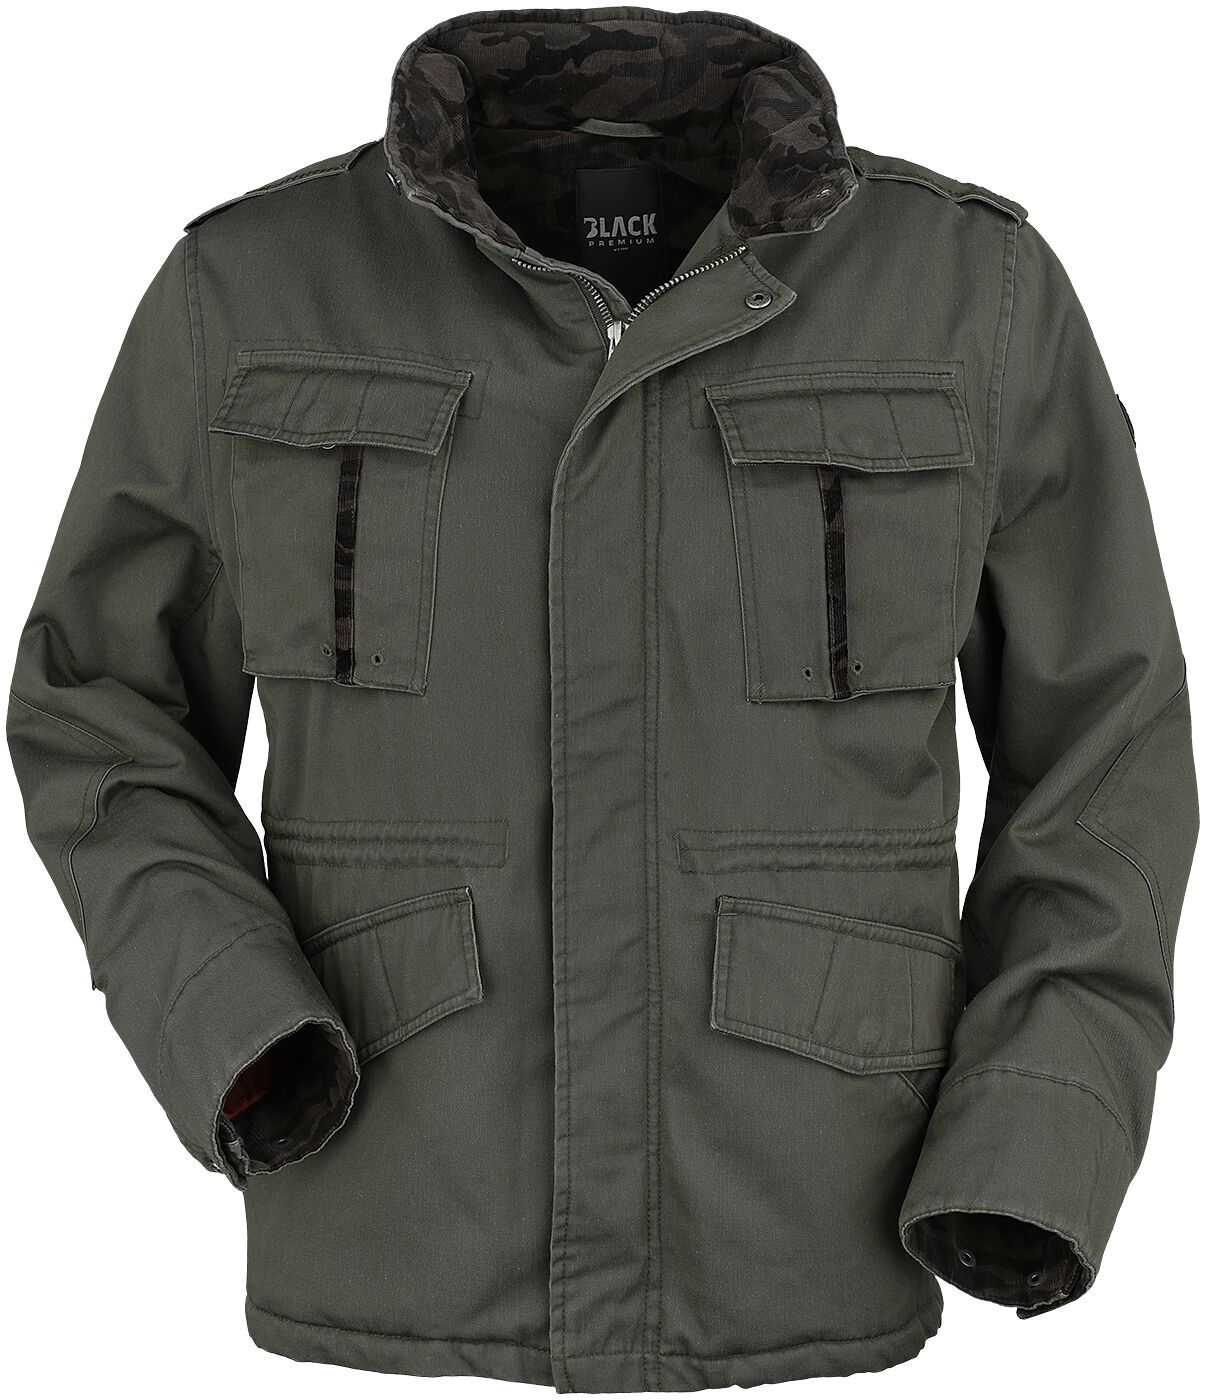 Black Premium by EMP Jacket with hidden hood Winterjacke oliv olivcamo in S